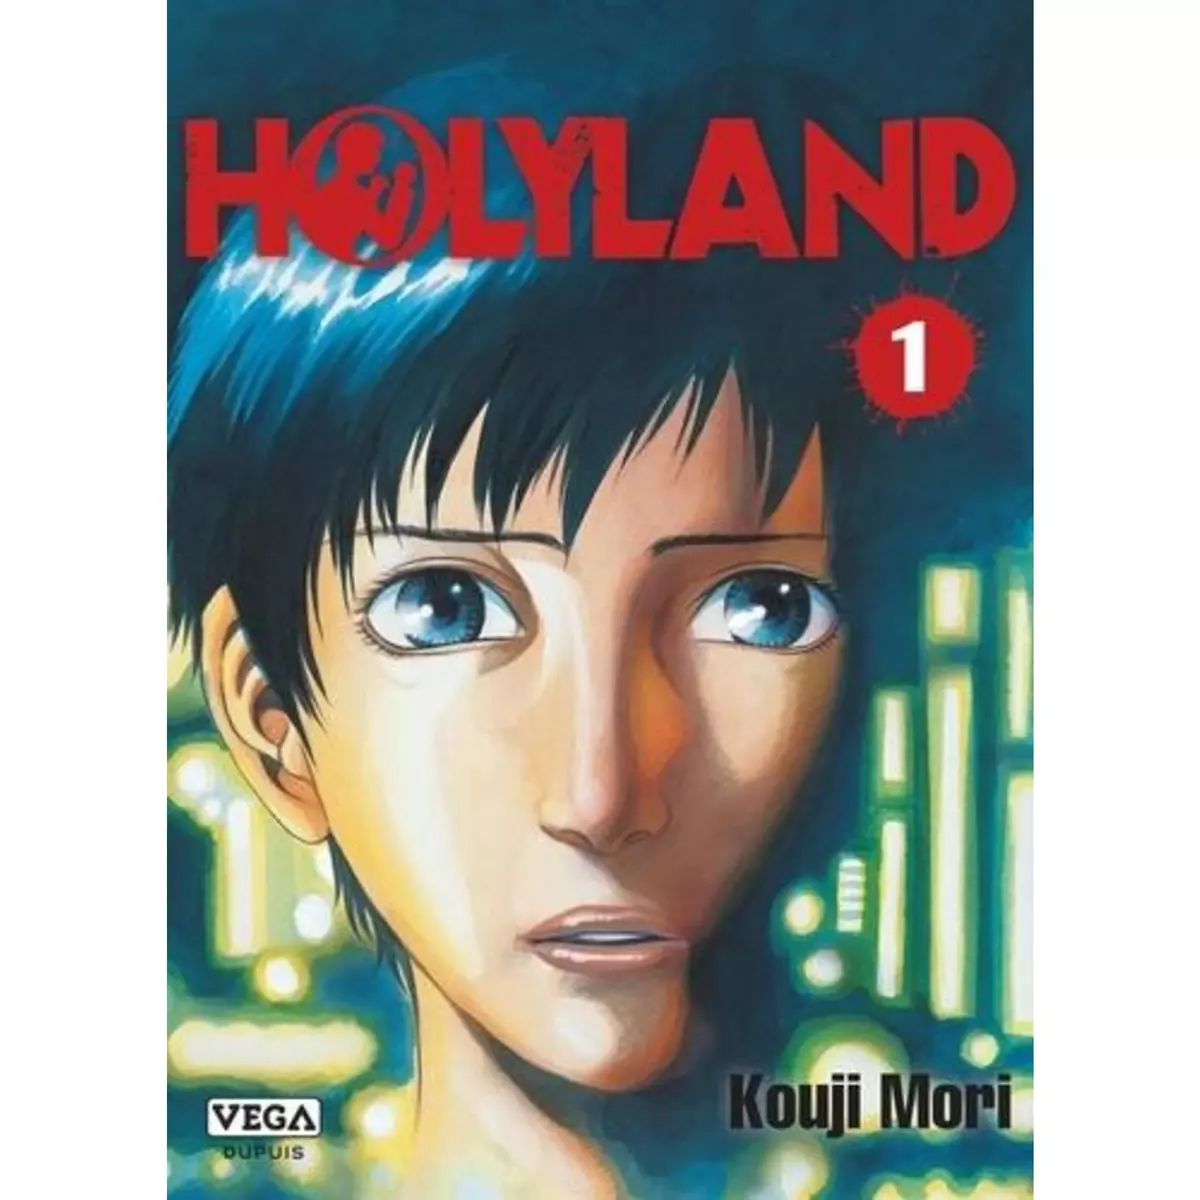  HOLYLAND TOME 1 , Mori Kouji